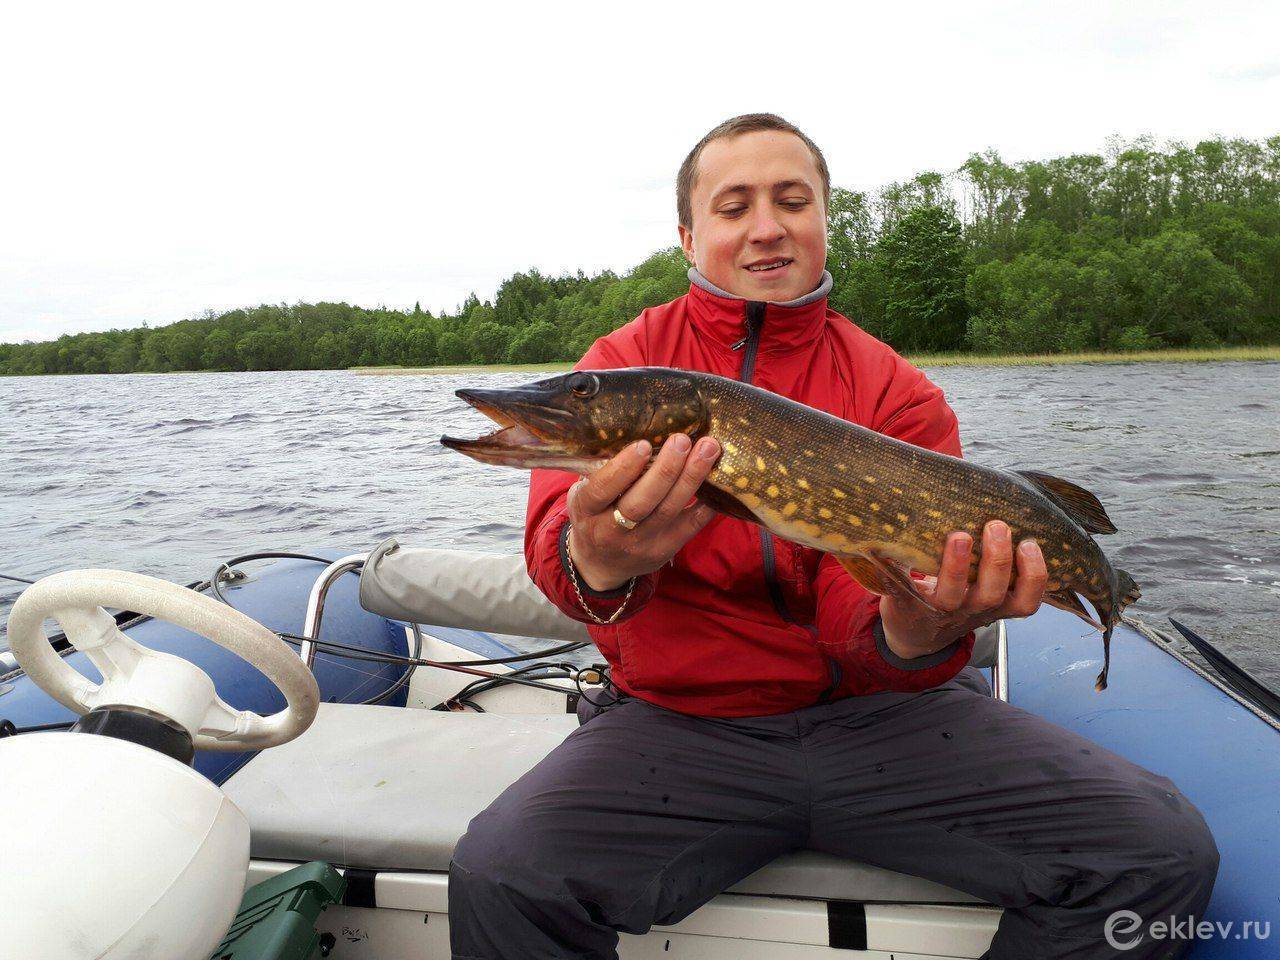 Псковско-чудское озеро - читайте на сatcher.fish